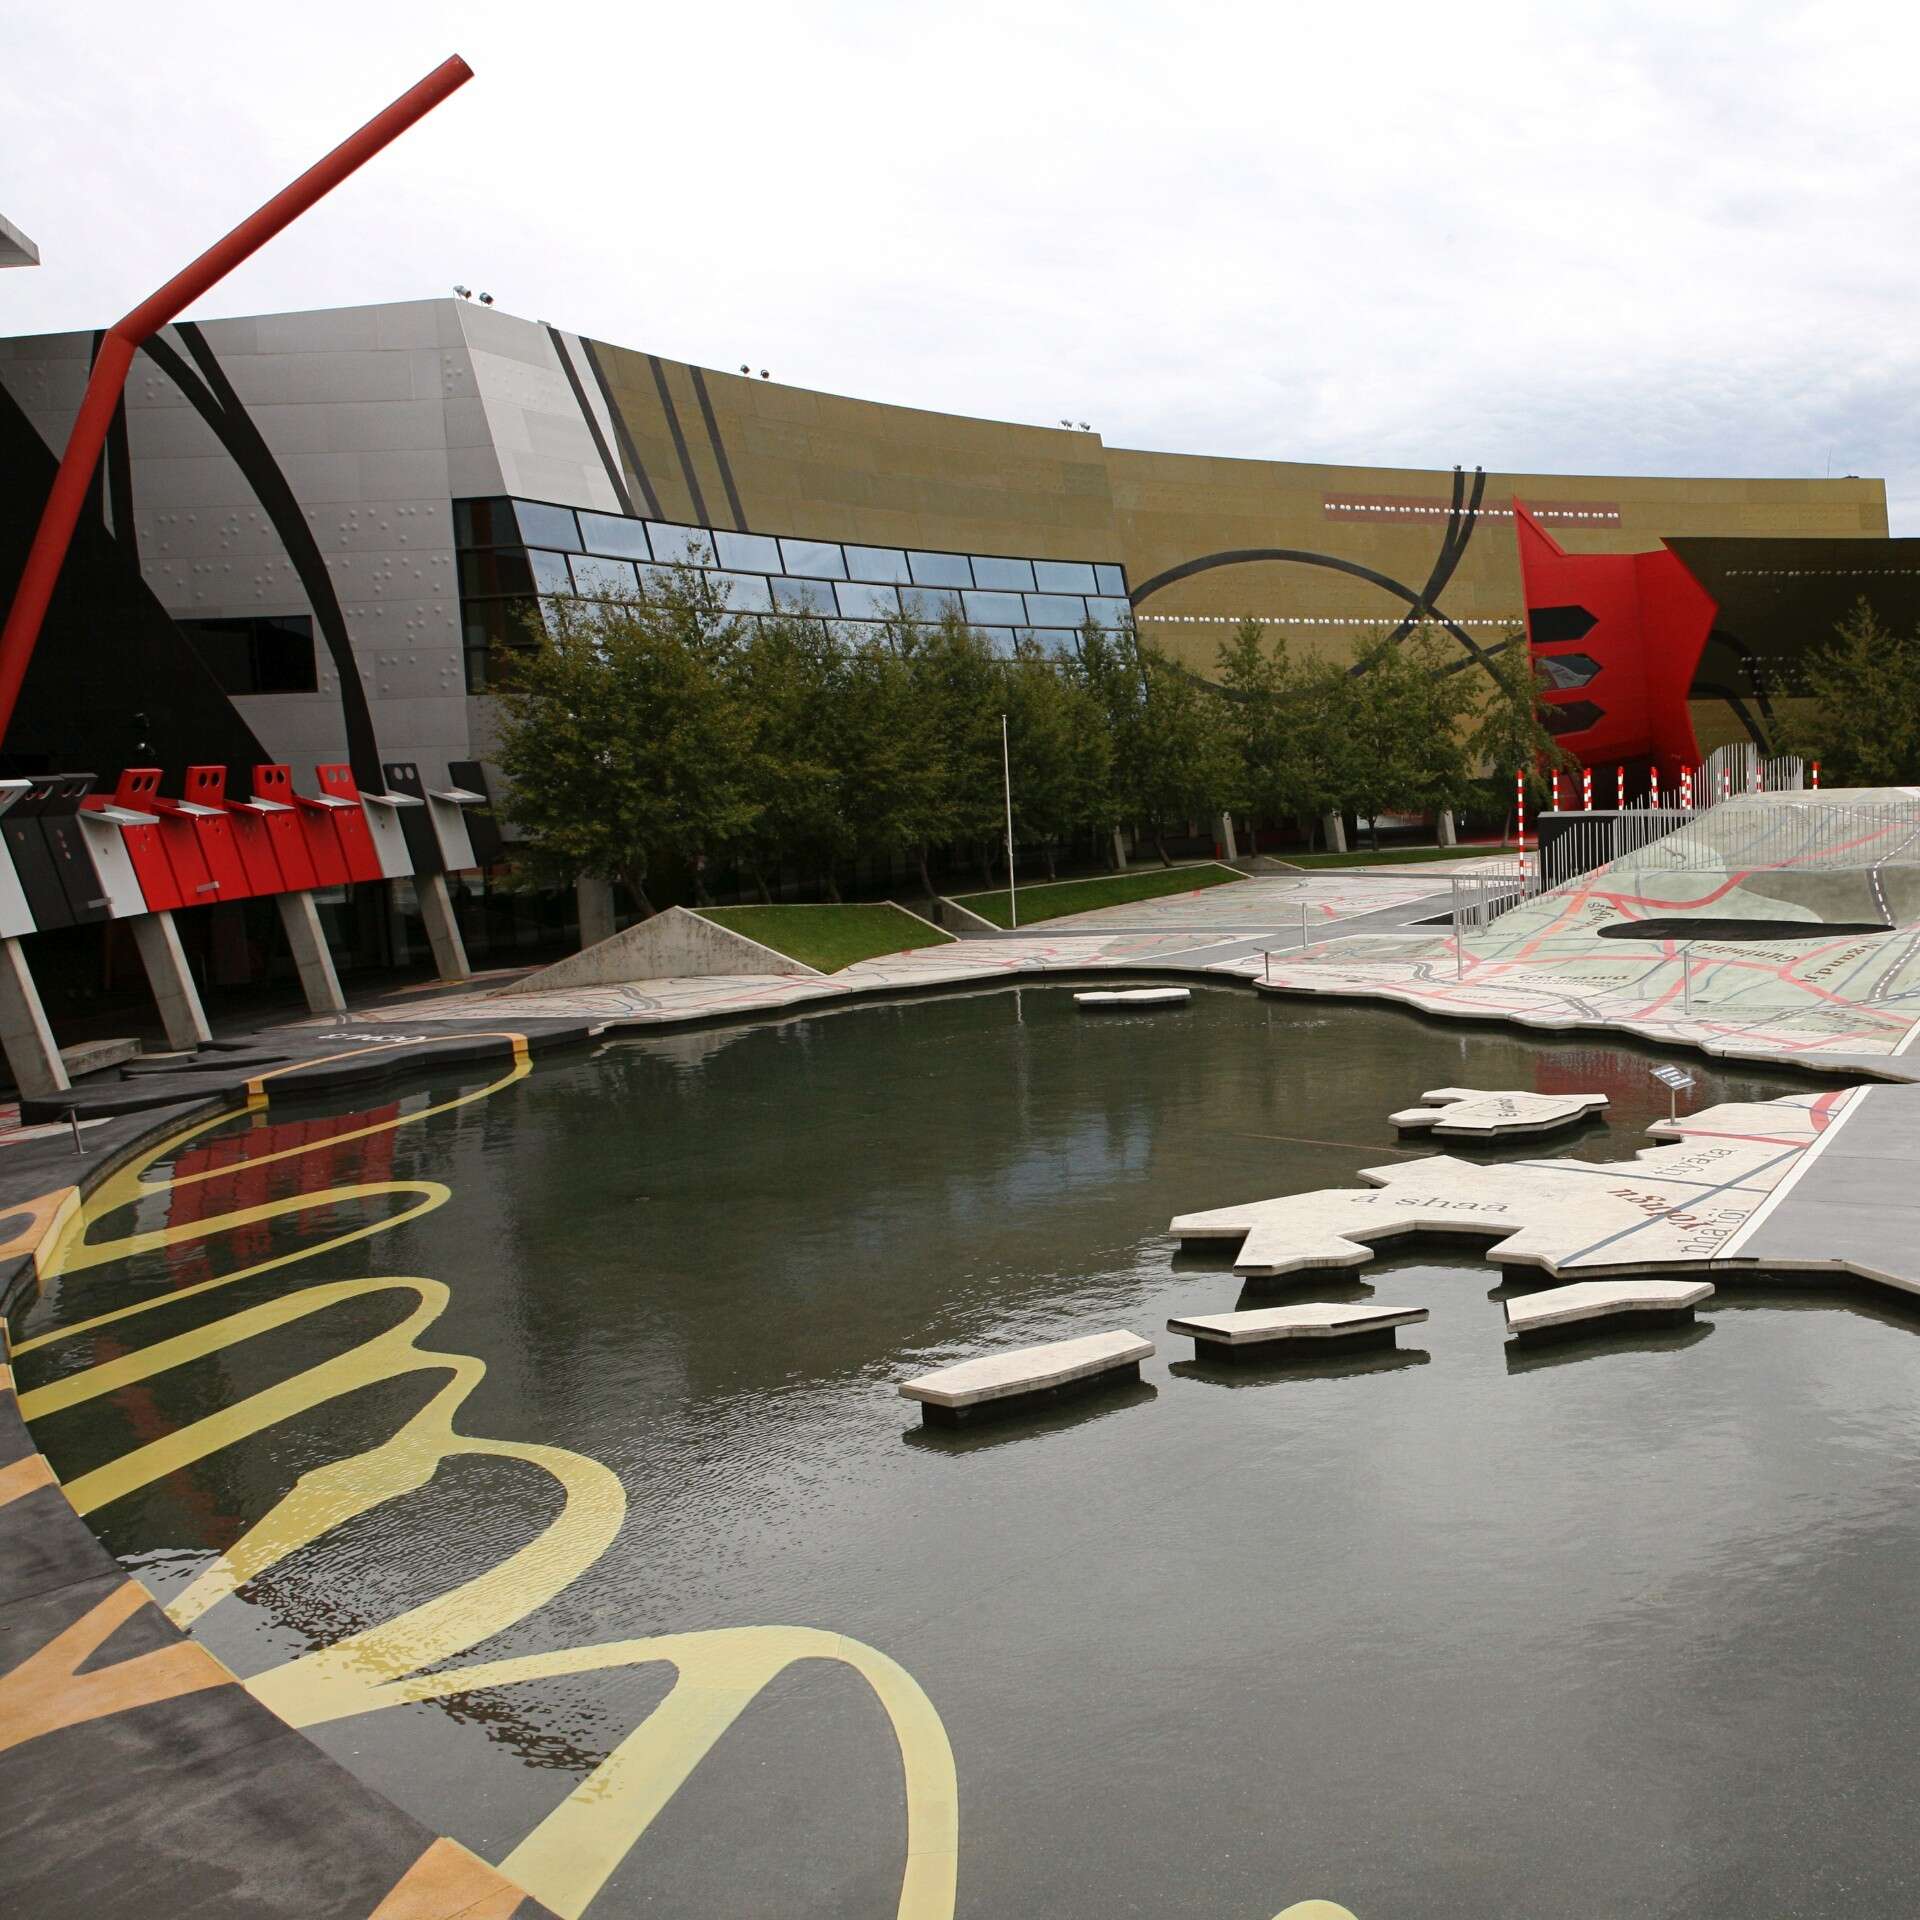 National Gallery of Australia, Canberra, Australian Capital Territory © Tourism Australia